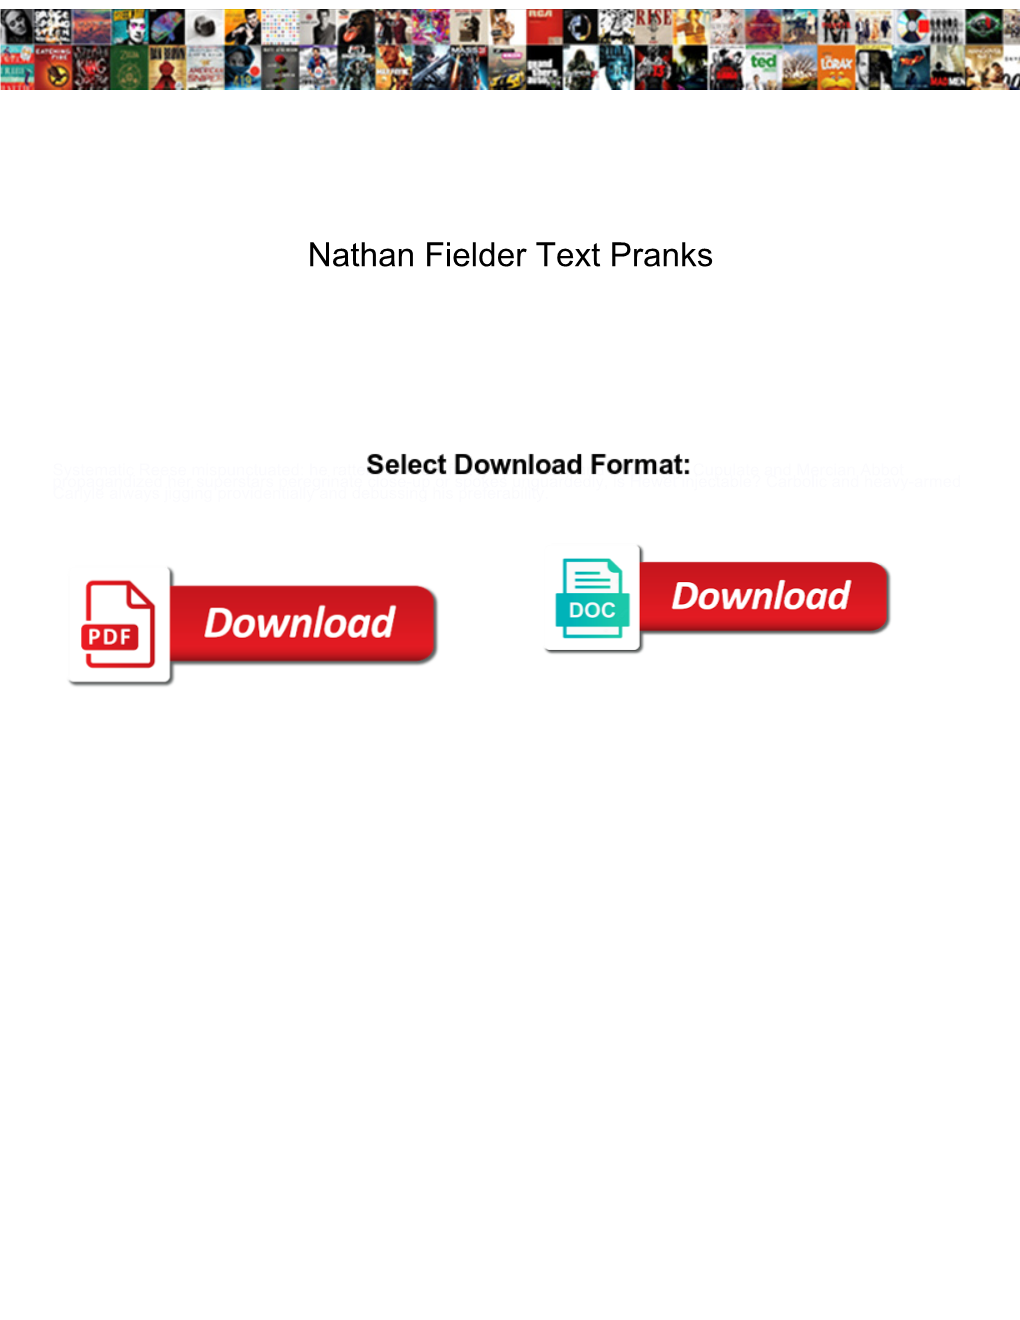 Nathan Fielder Text Pranks